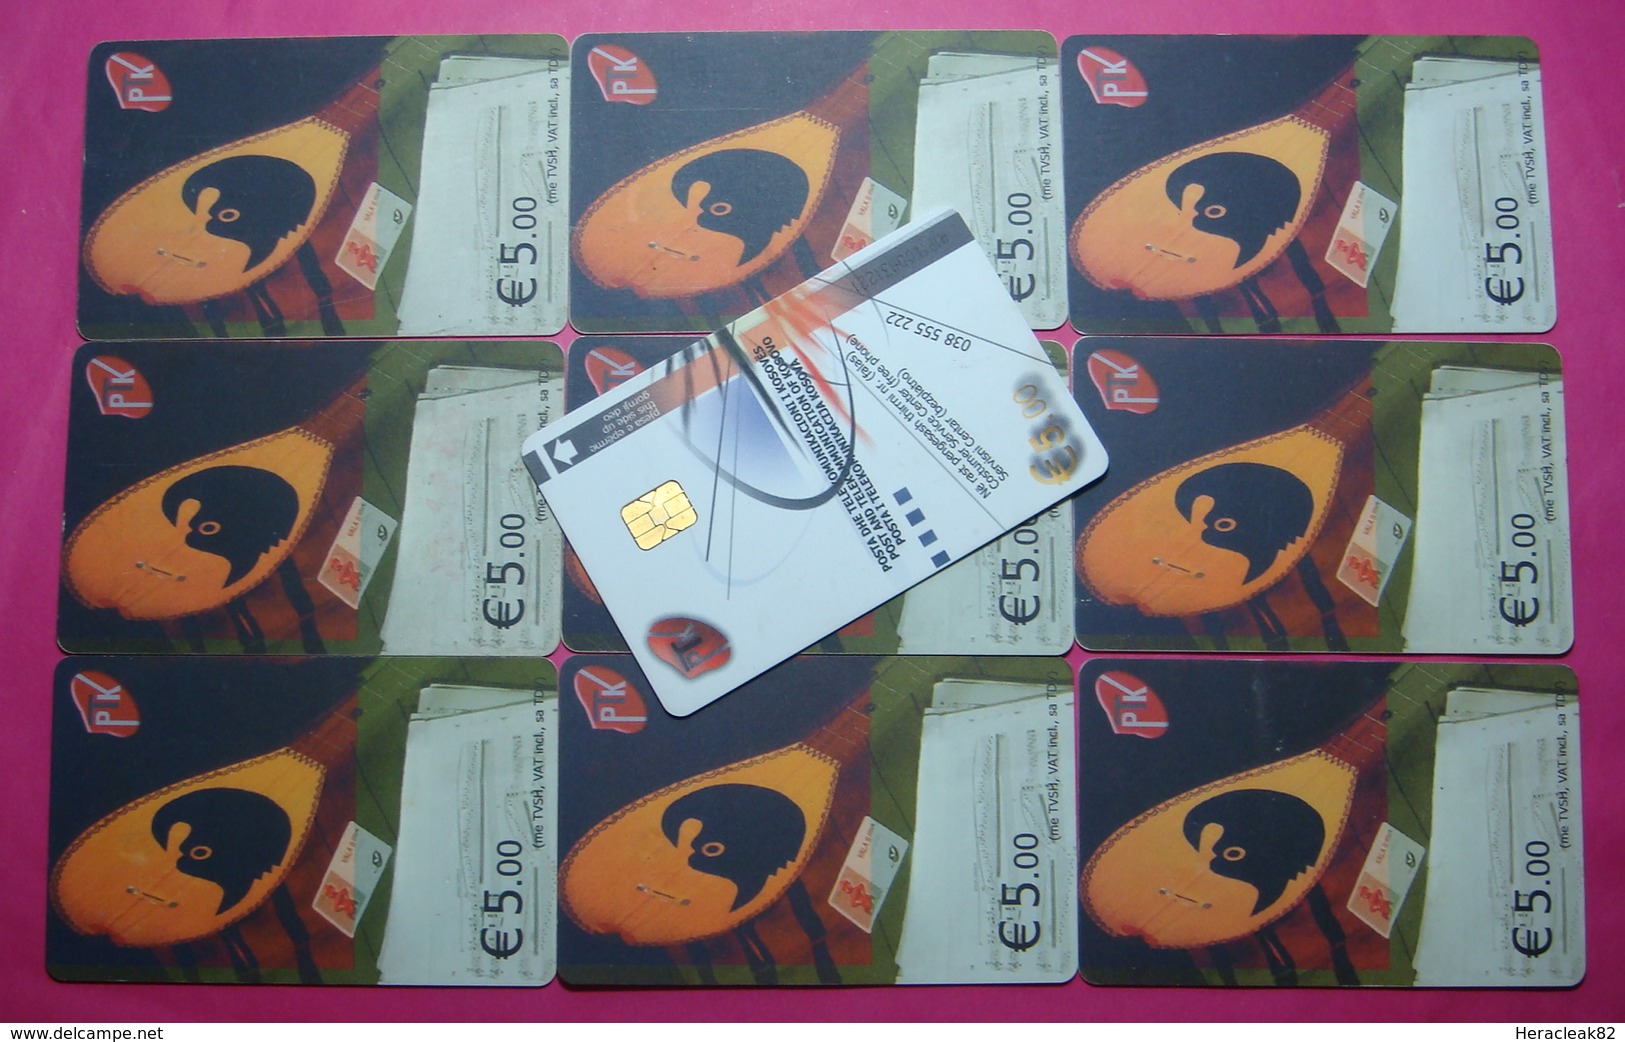 Series 008, Kosovo Lot Of 10 Chip Phone CARD 5 EURO Used Operator VALA900 (Alcatel) *Turkish National Instr* - Kosovo